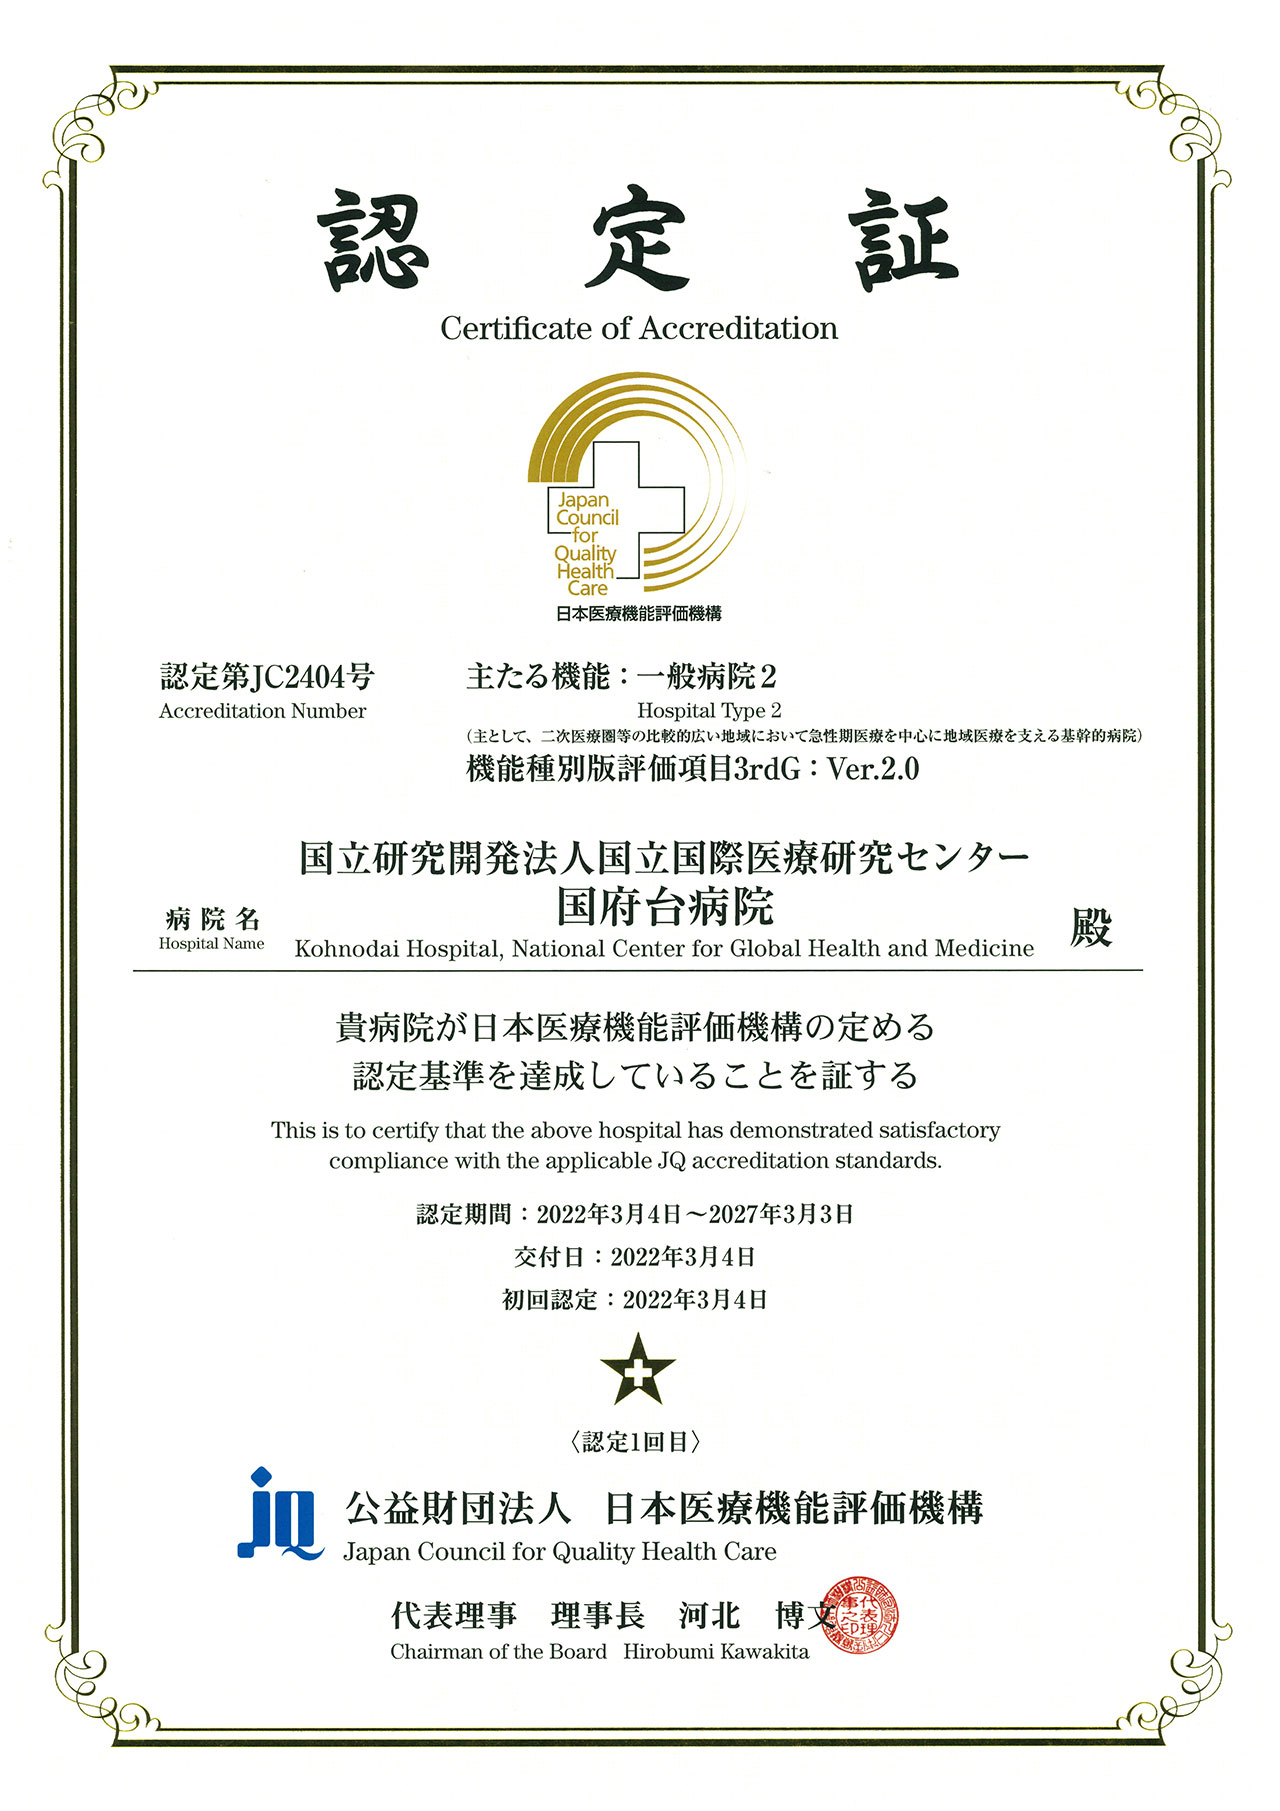 certificate_of_accreditation_20220407.jpg